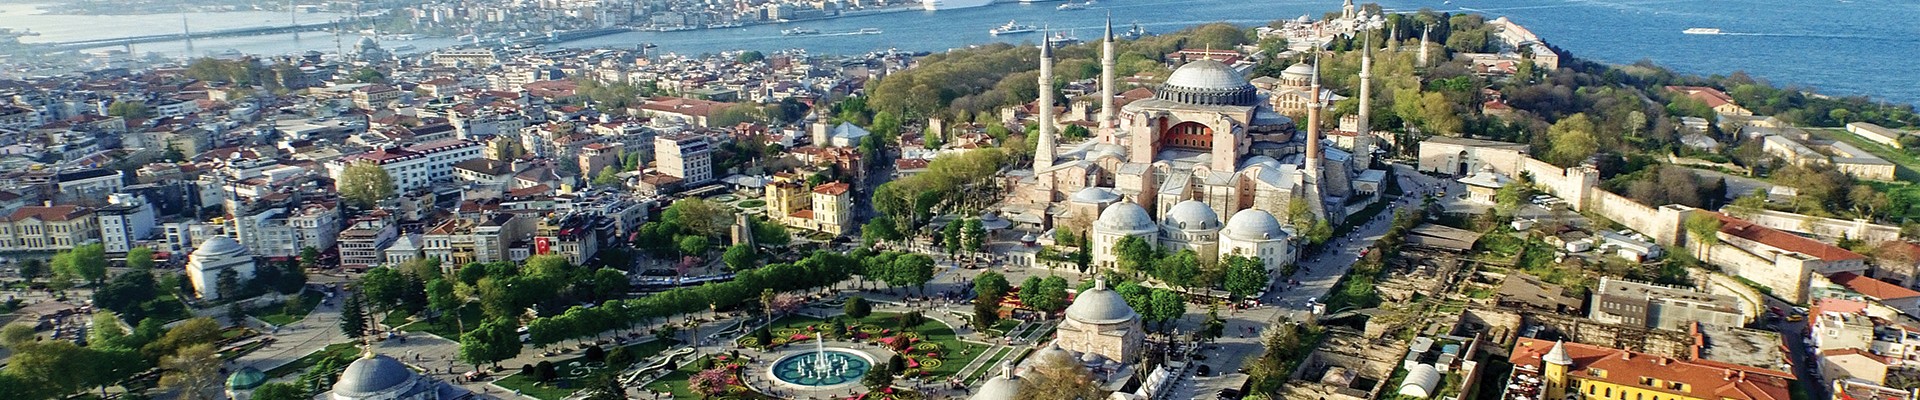 4* Memorable Istanbul (4 Nights)